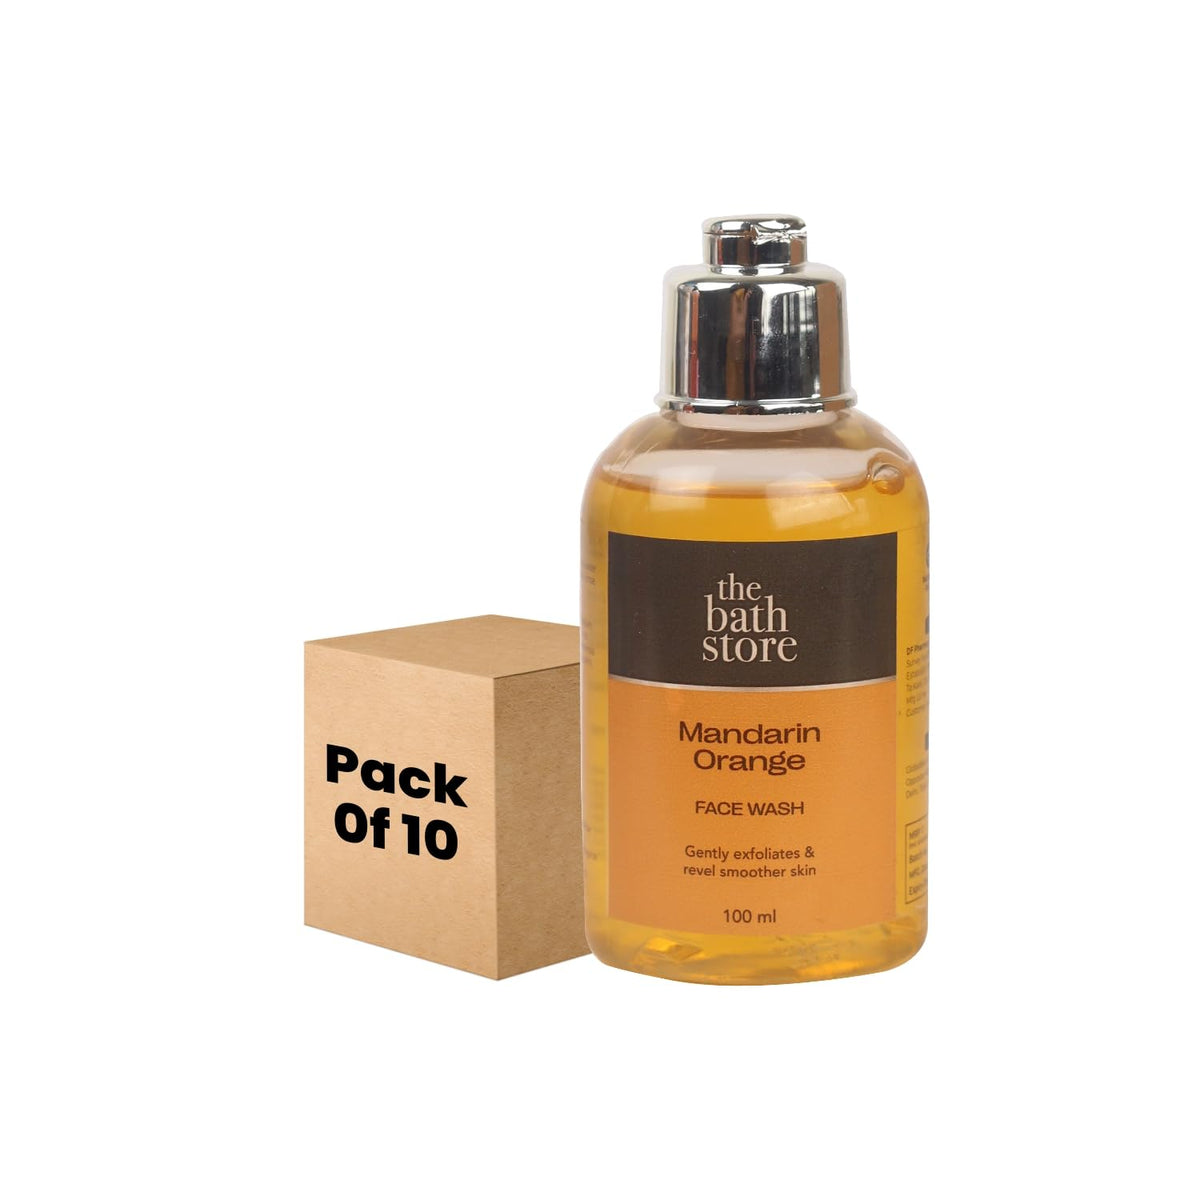 The Bath Store Mandarin Orange Face Wash - Gentle Exfoliation | Deep Cleansing - 100ml (Pack of 10)